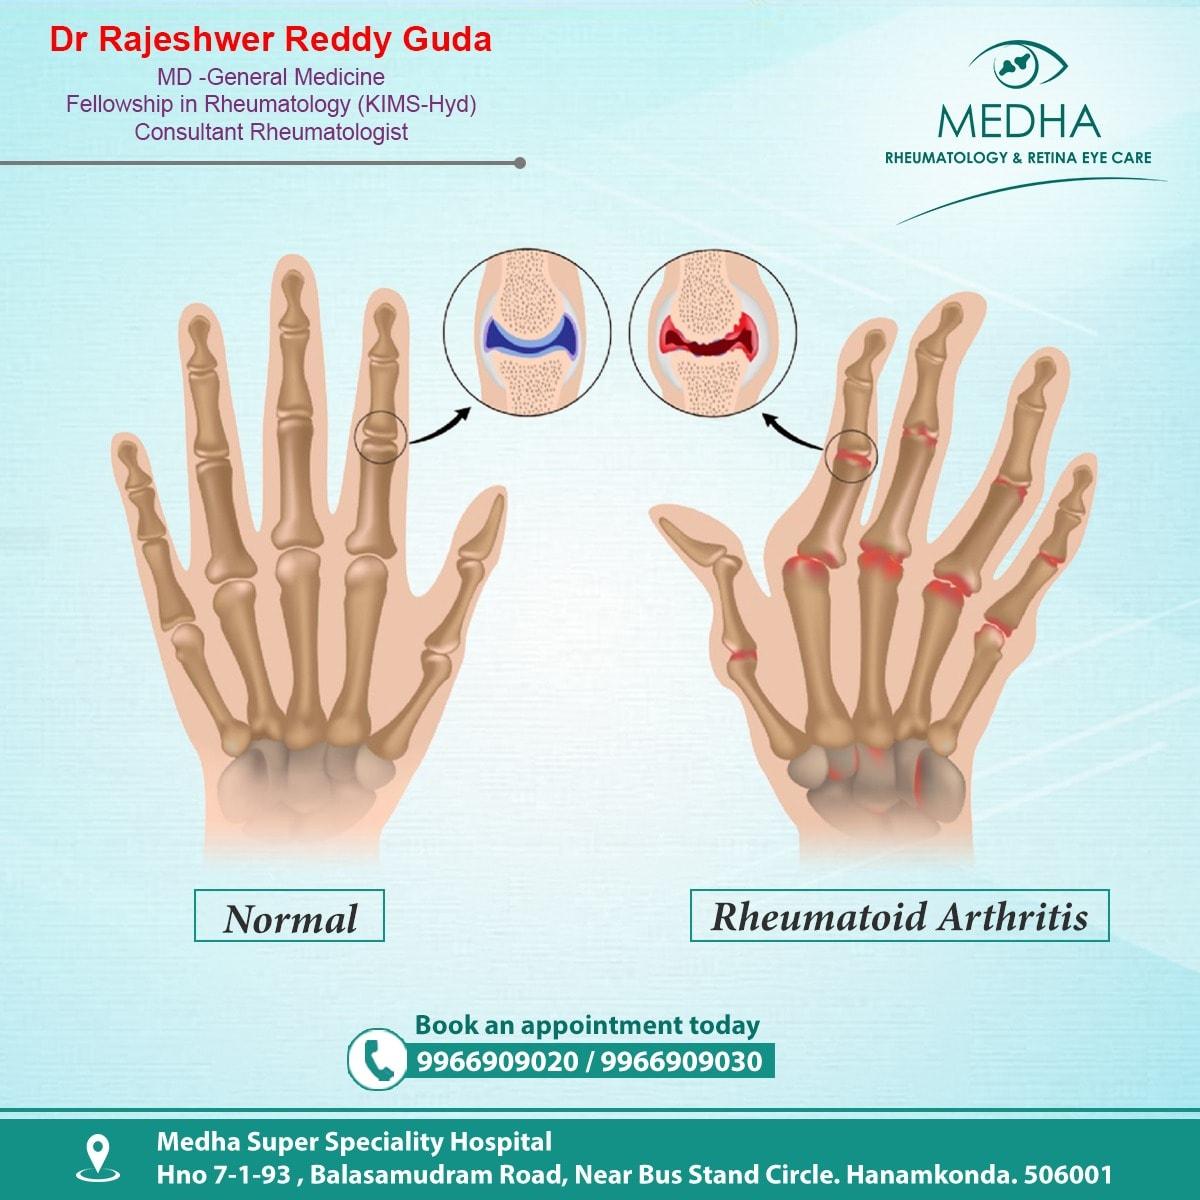 Difference Between Normal Hand & Rheumatoid Arthritis Hand